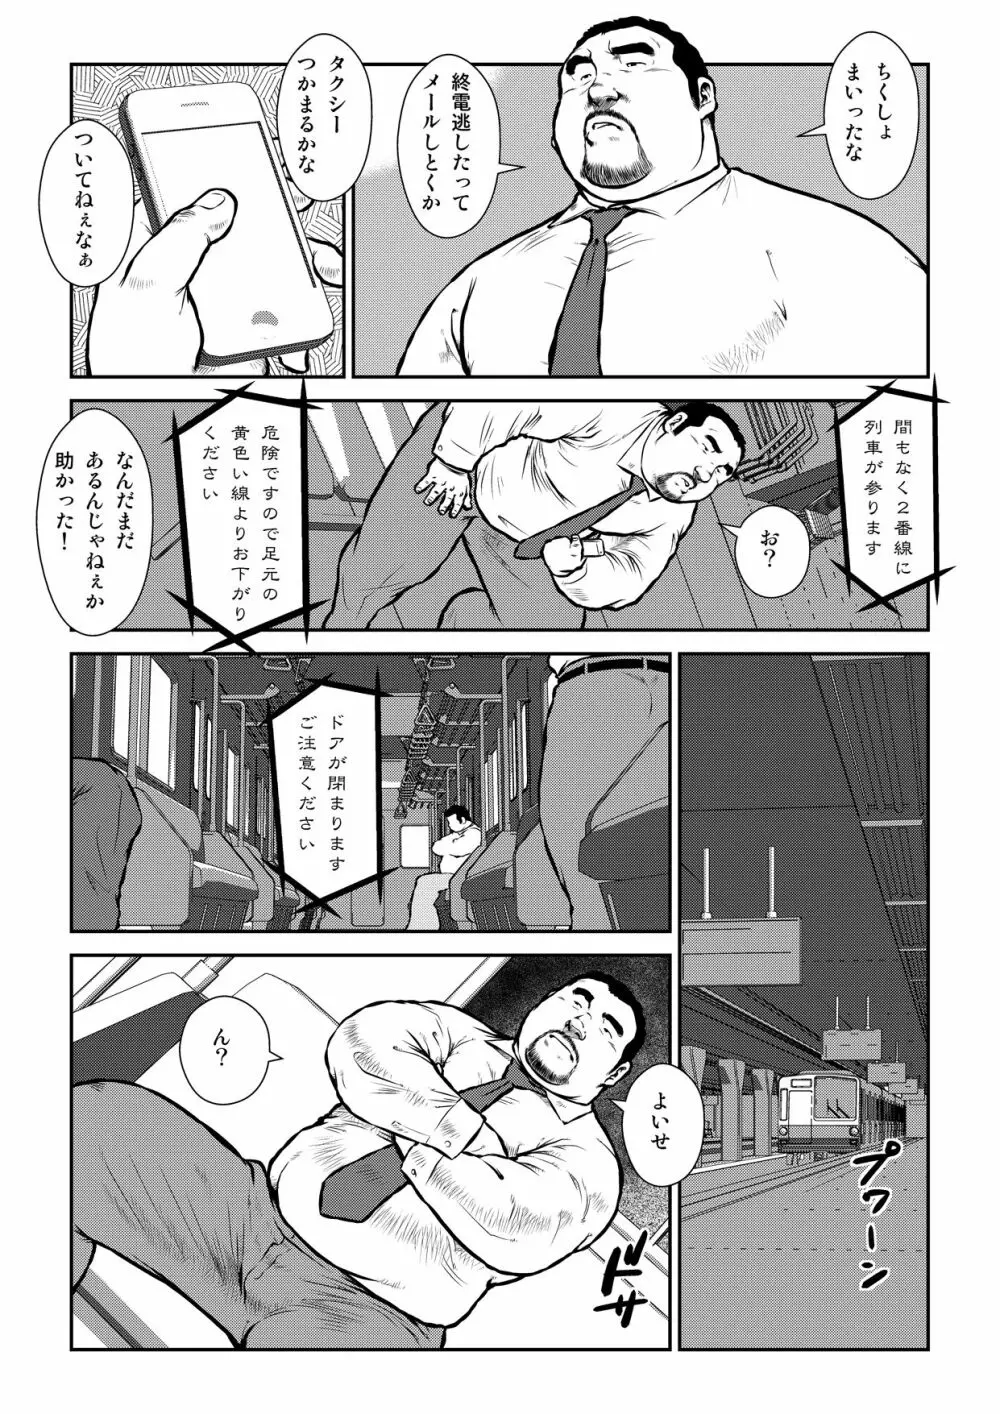 穴場2〜地下鉄〜 2ページ